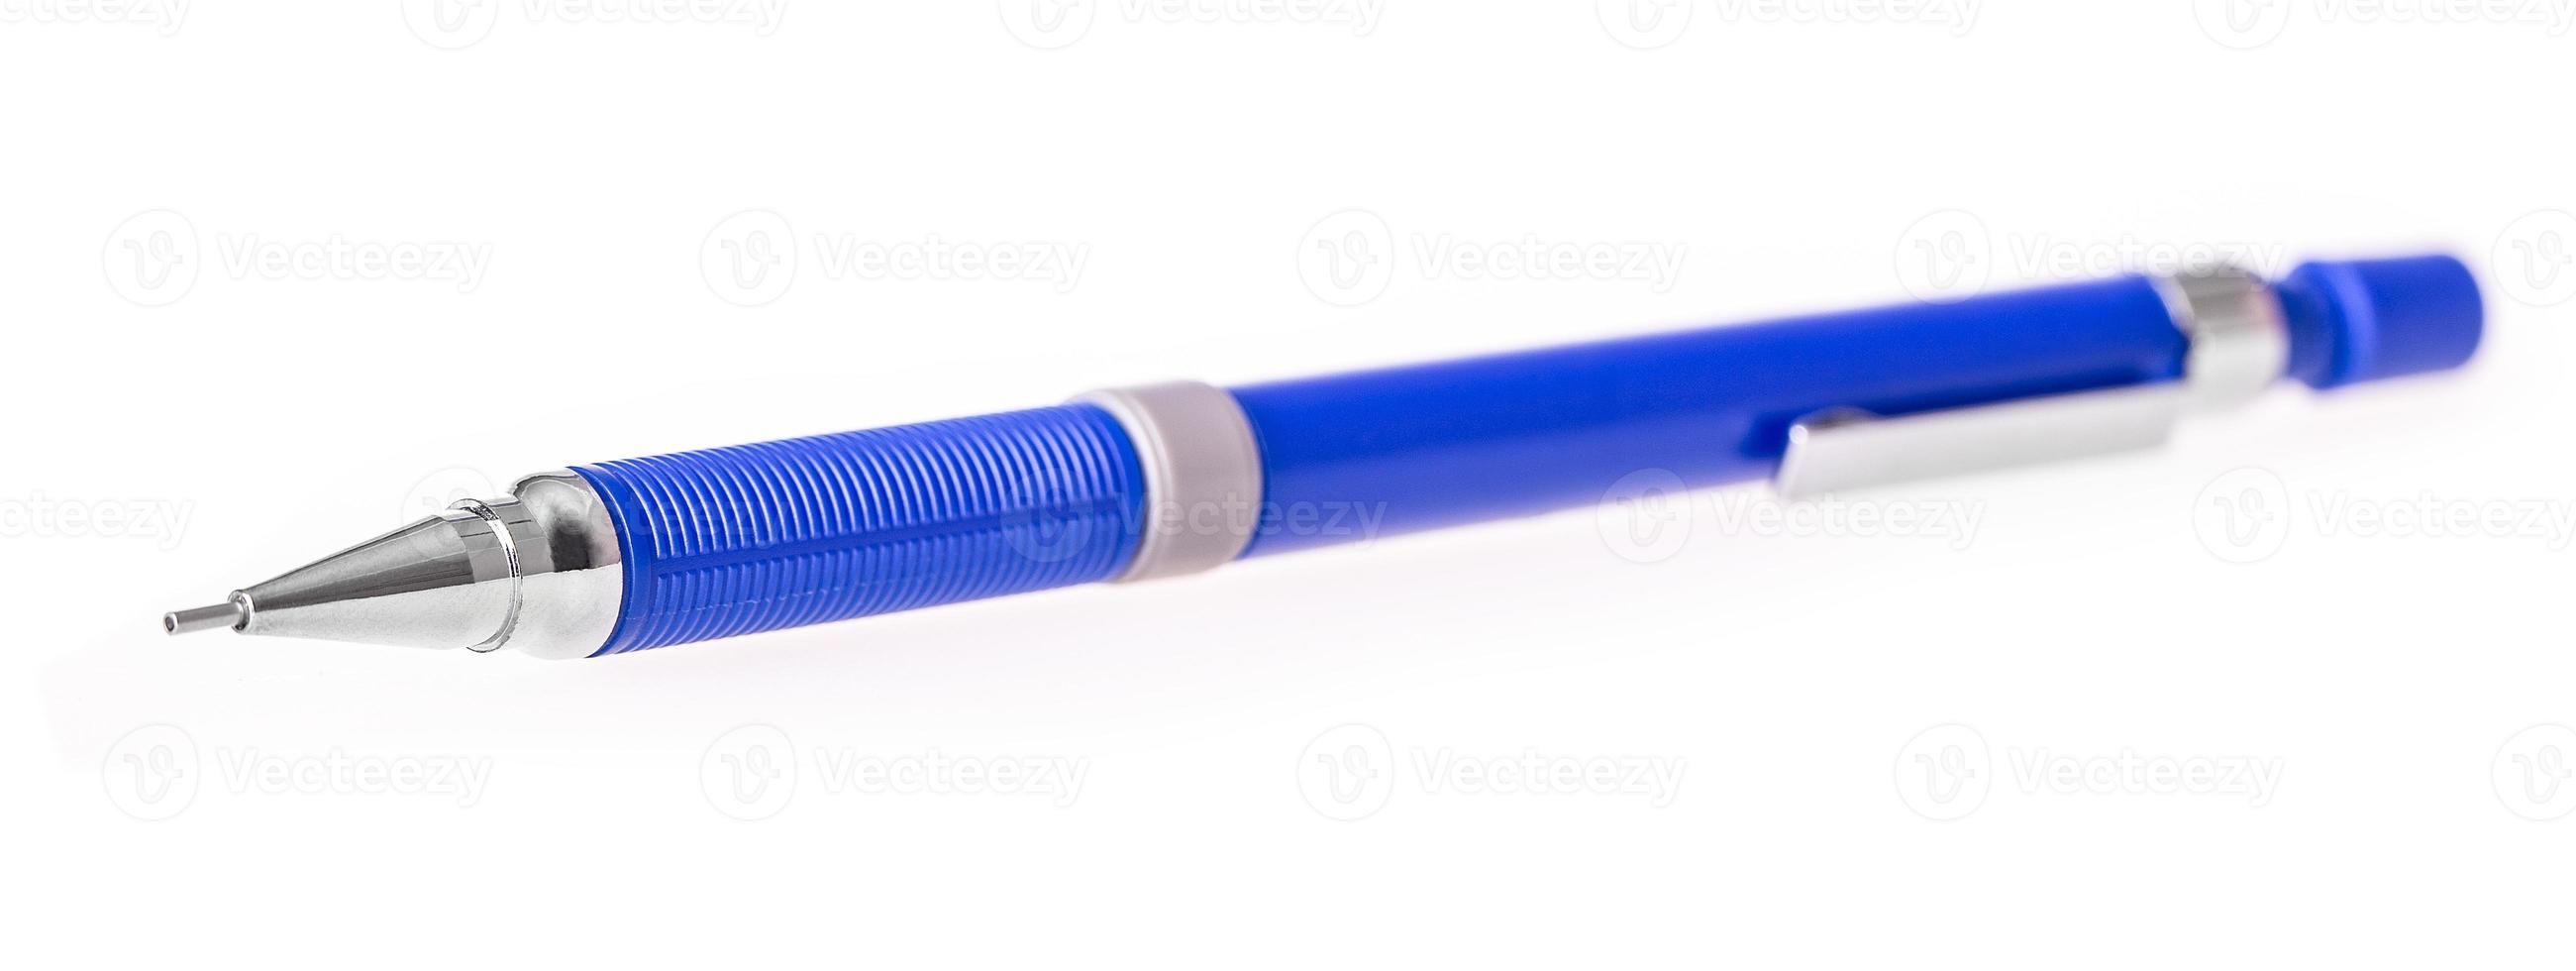 a caneta esferográfica azul isolada no fundo branco foto